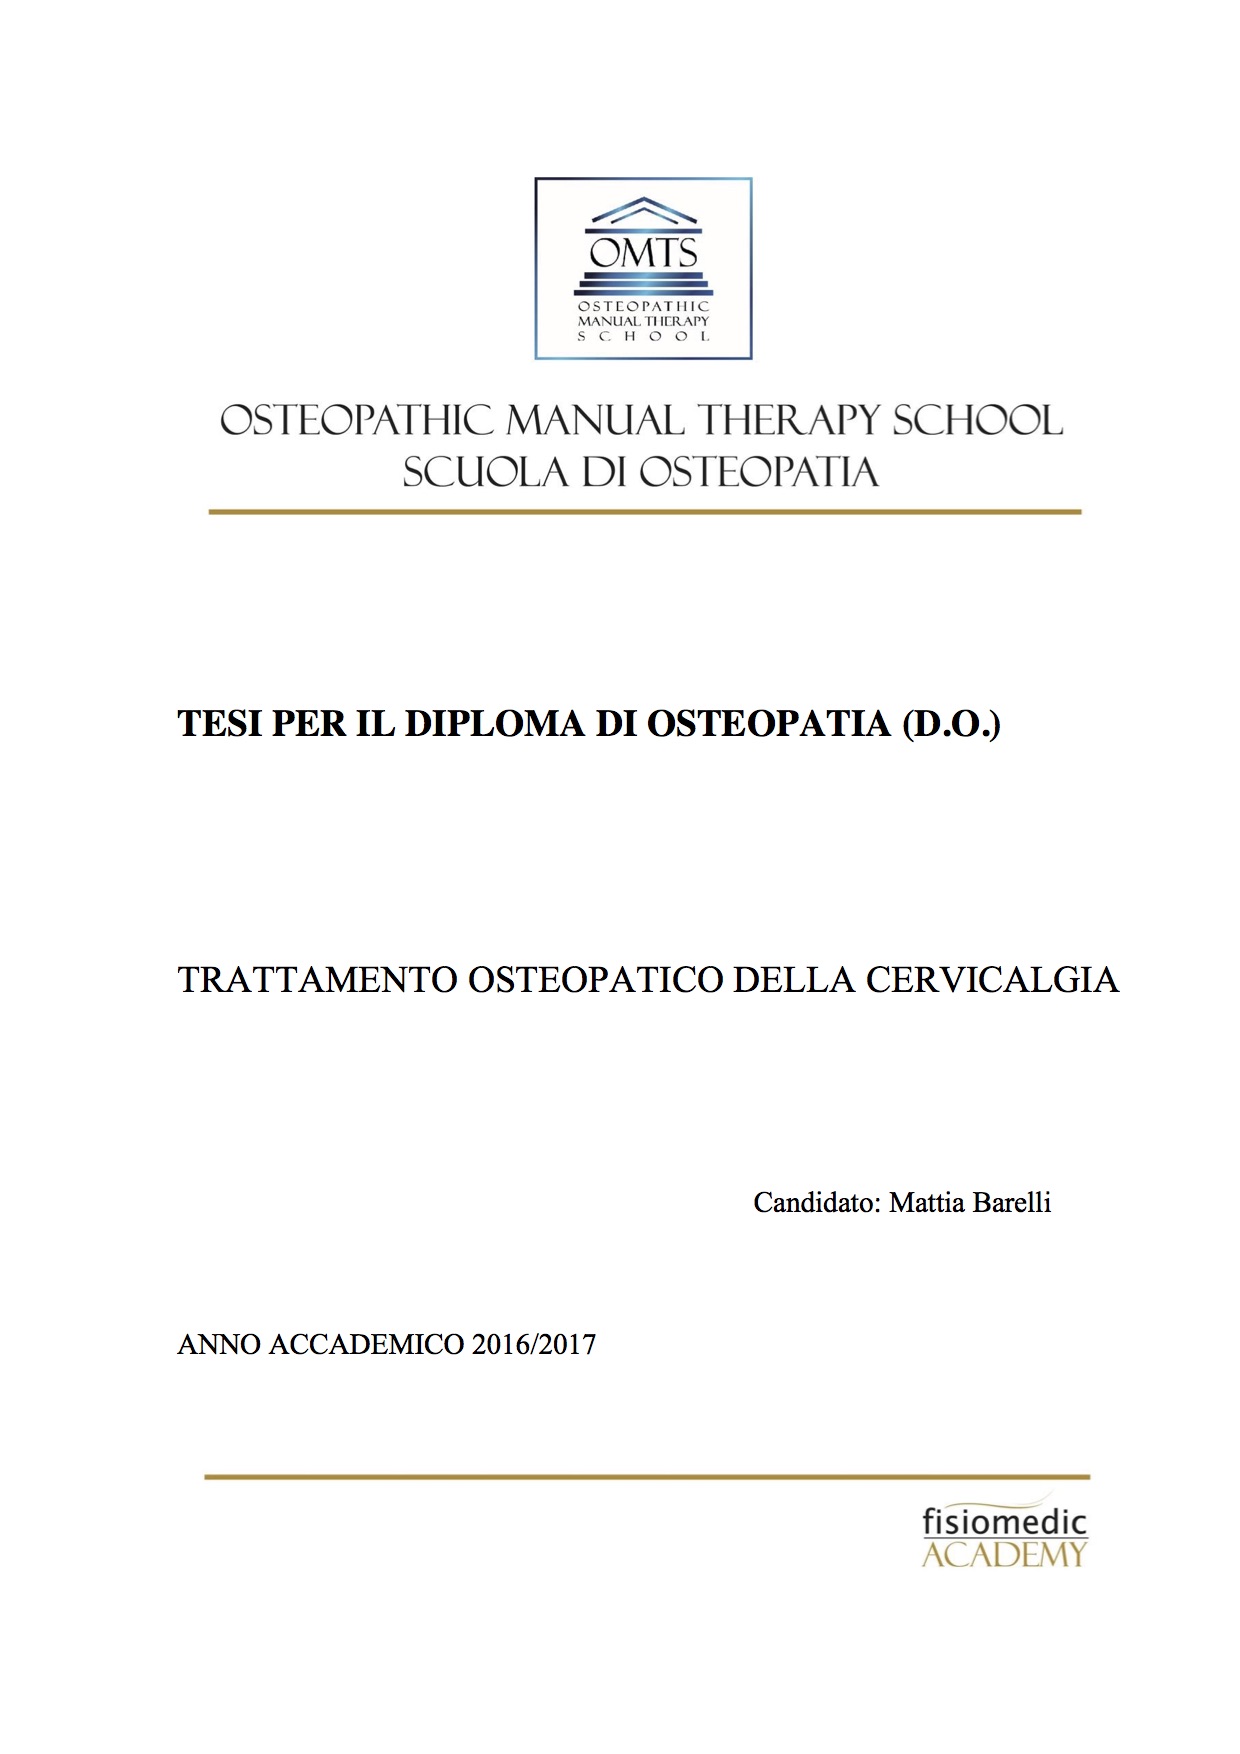 Mattia Barelli Tesi Diploma Osteopatia 2017